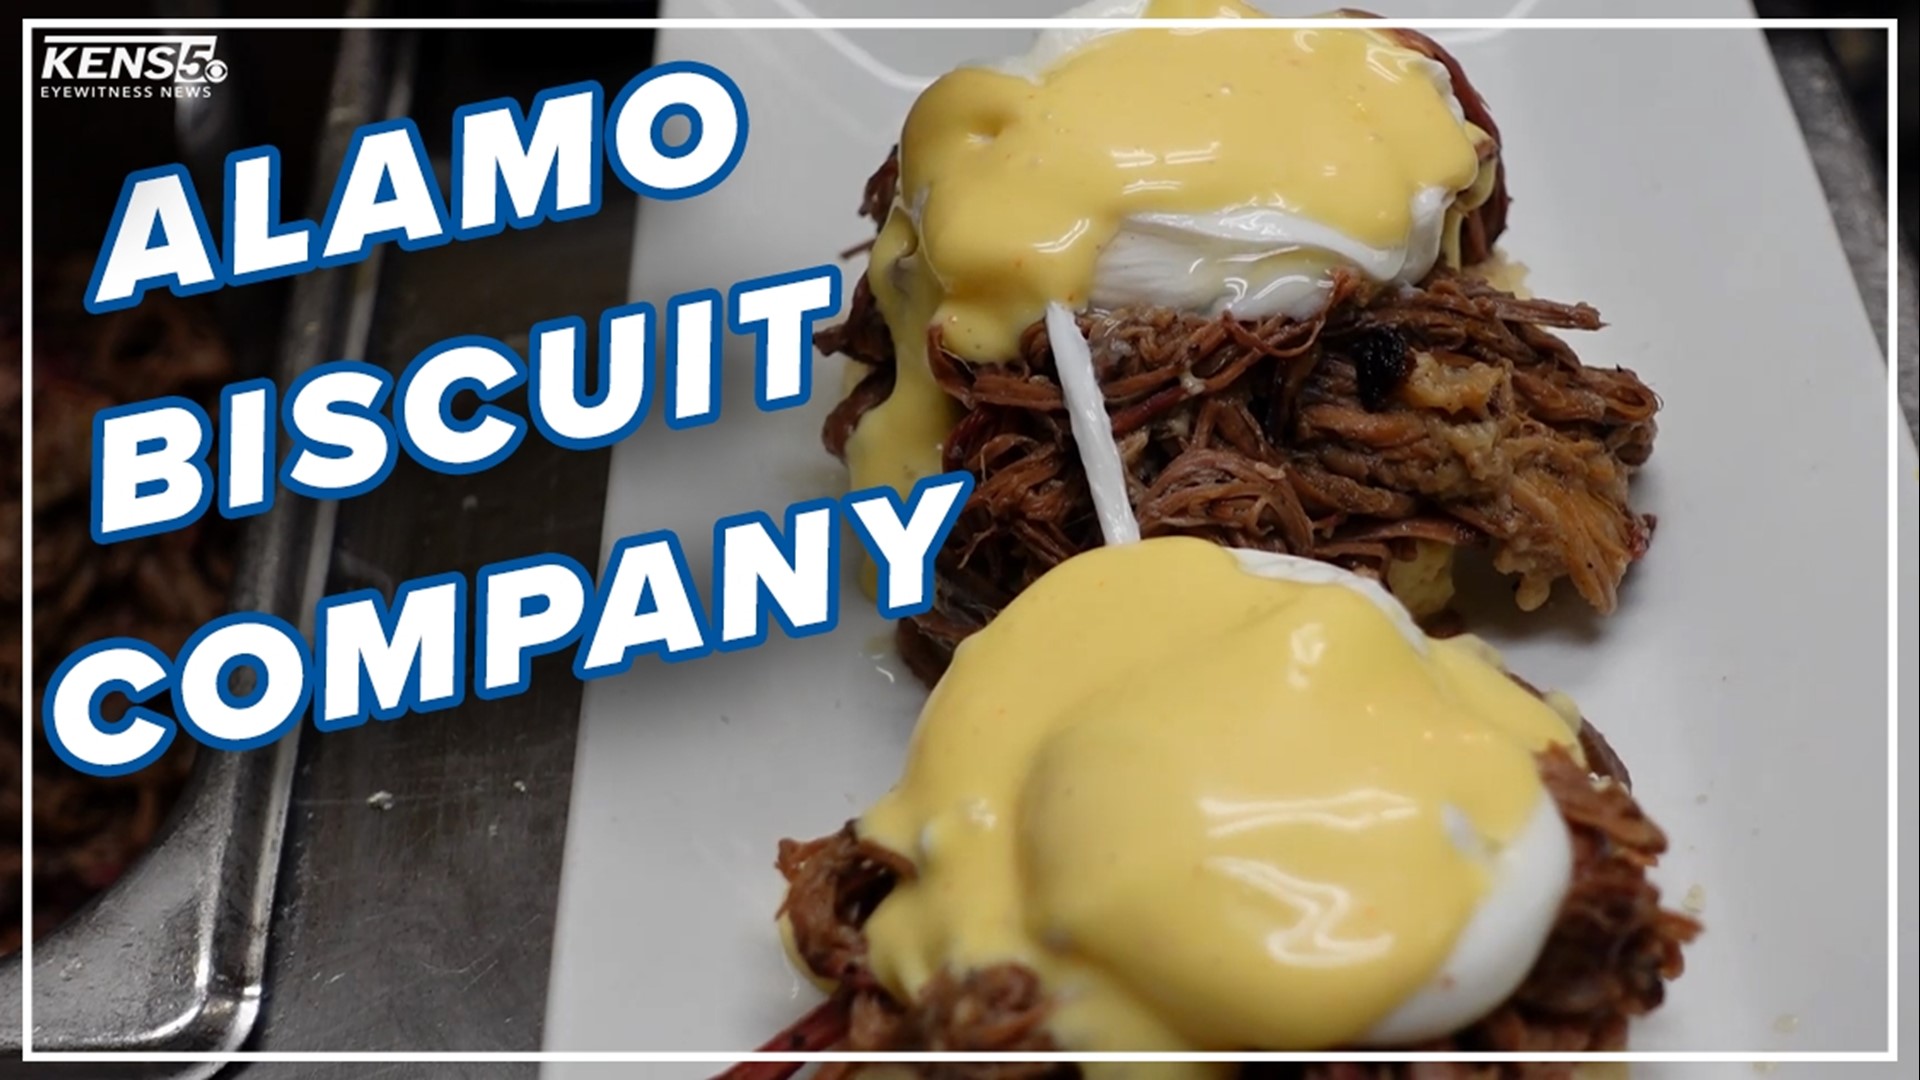 We visited Alamo Biscuit Company & Panaderia on Neighborhood Eats, a KENS 5 original series.